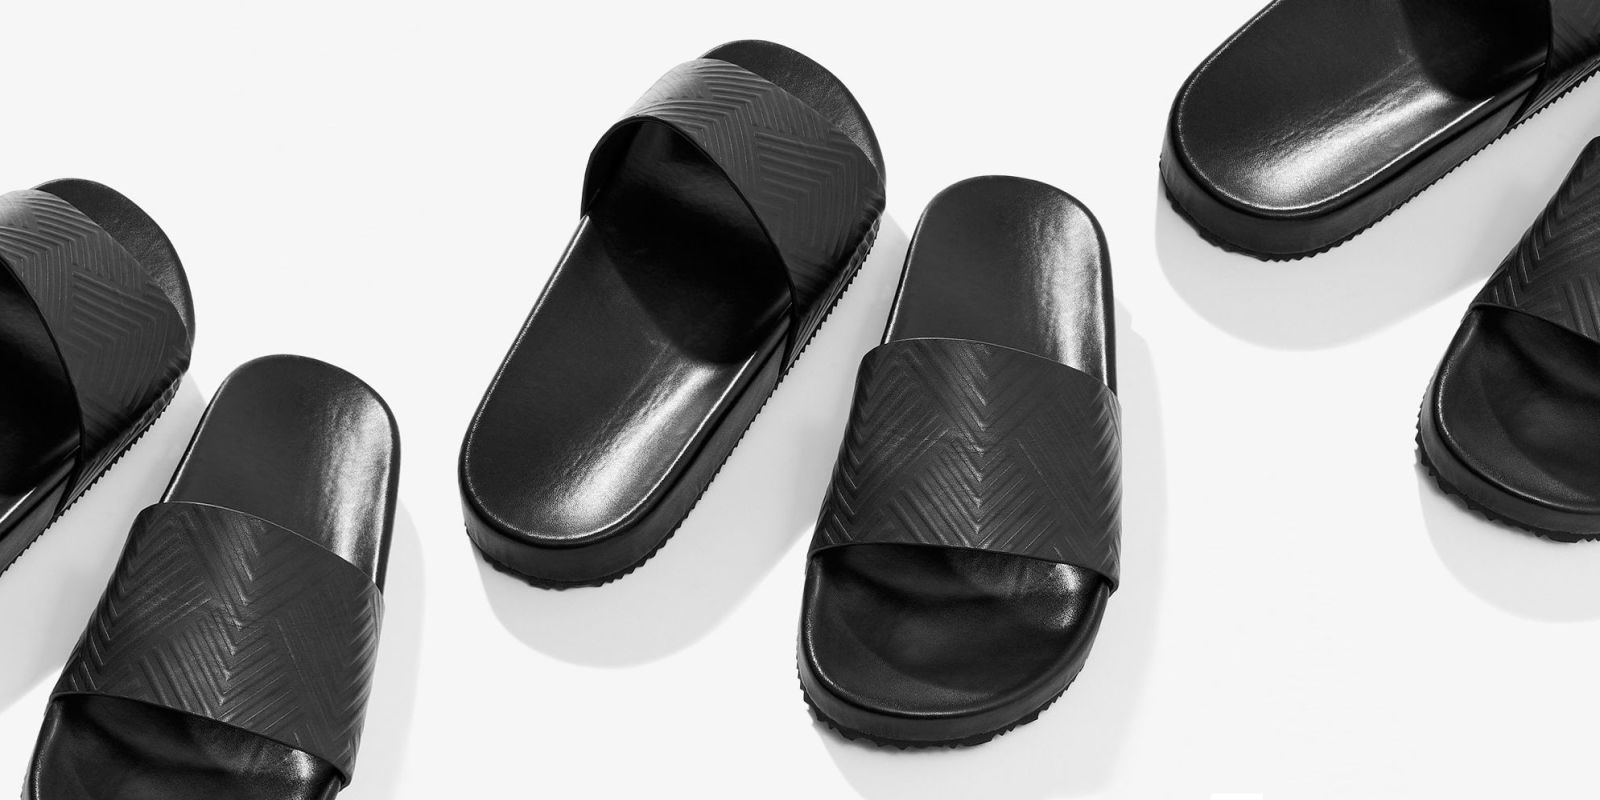 SUNNY Store 2018 Mens Sandals Casual Summer Slippers Shoes Men Rubber Platform Sandals Beach Flip Flops for Men Sandalias